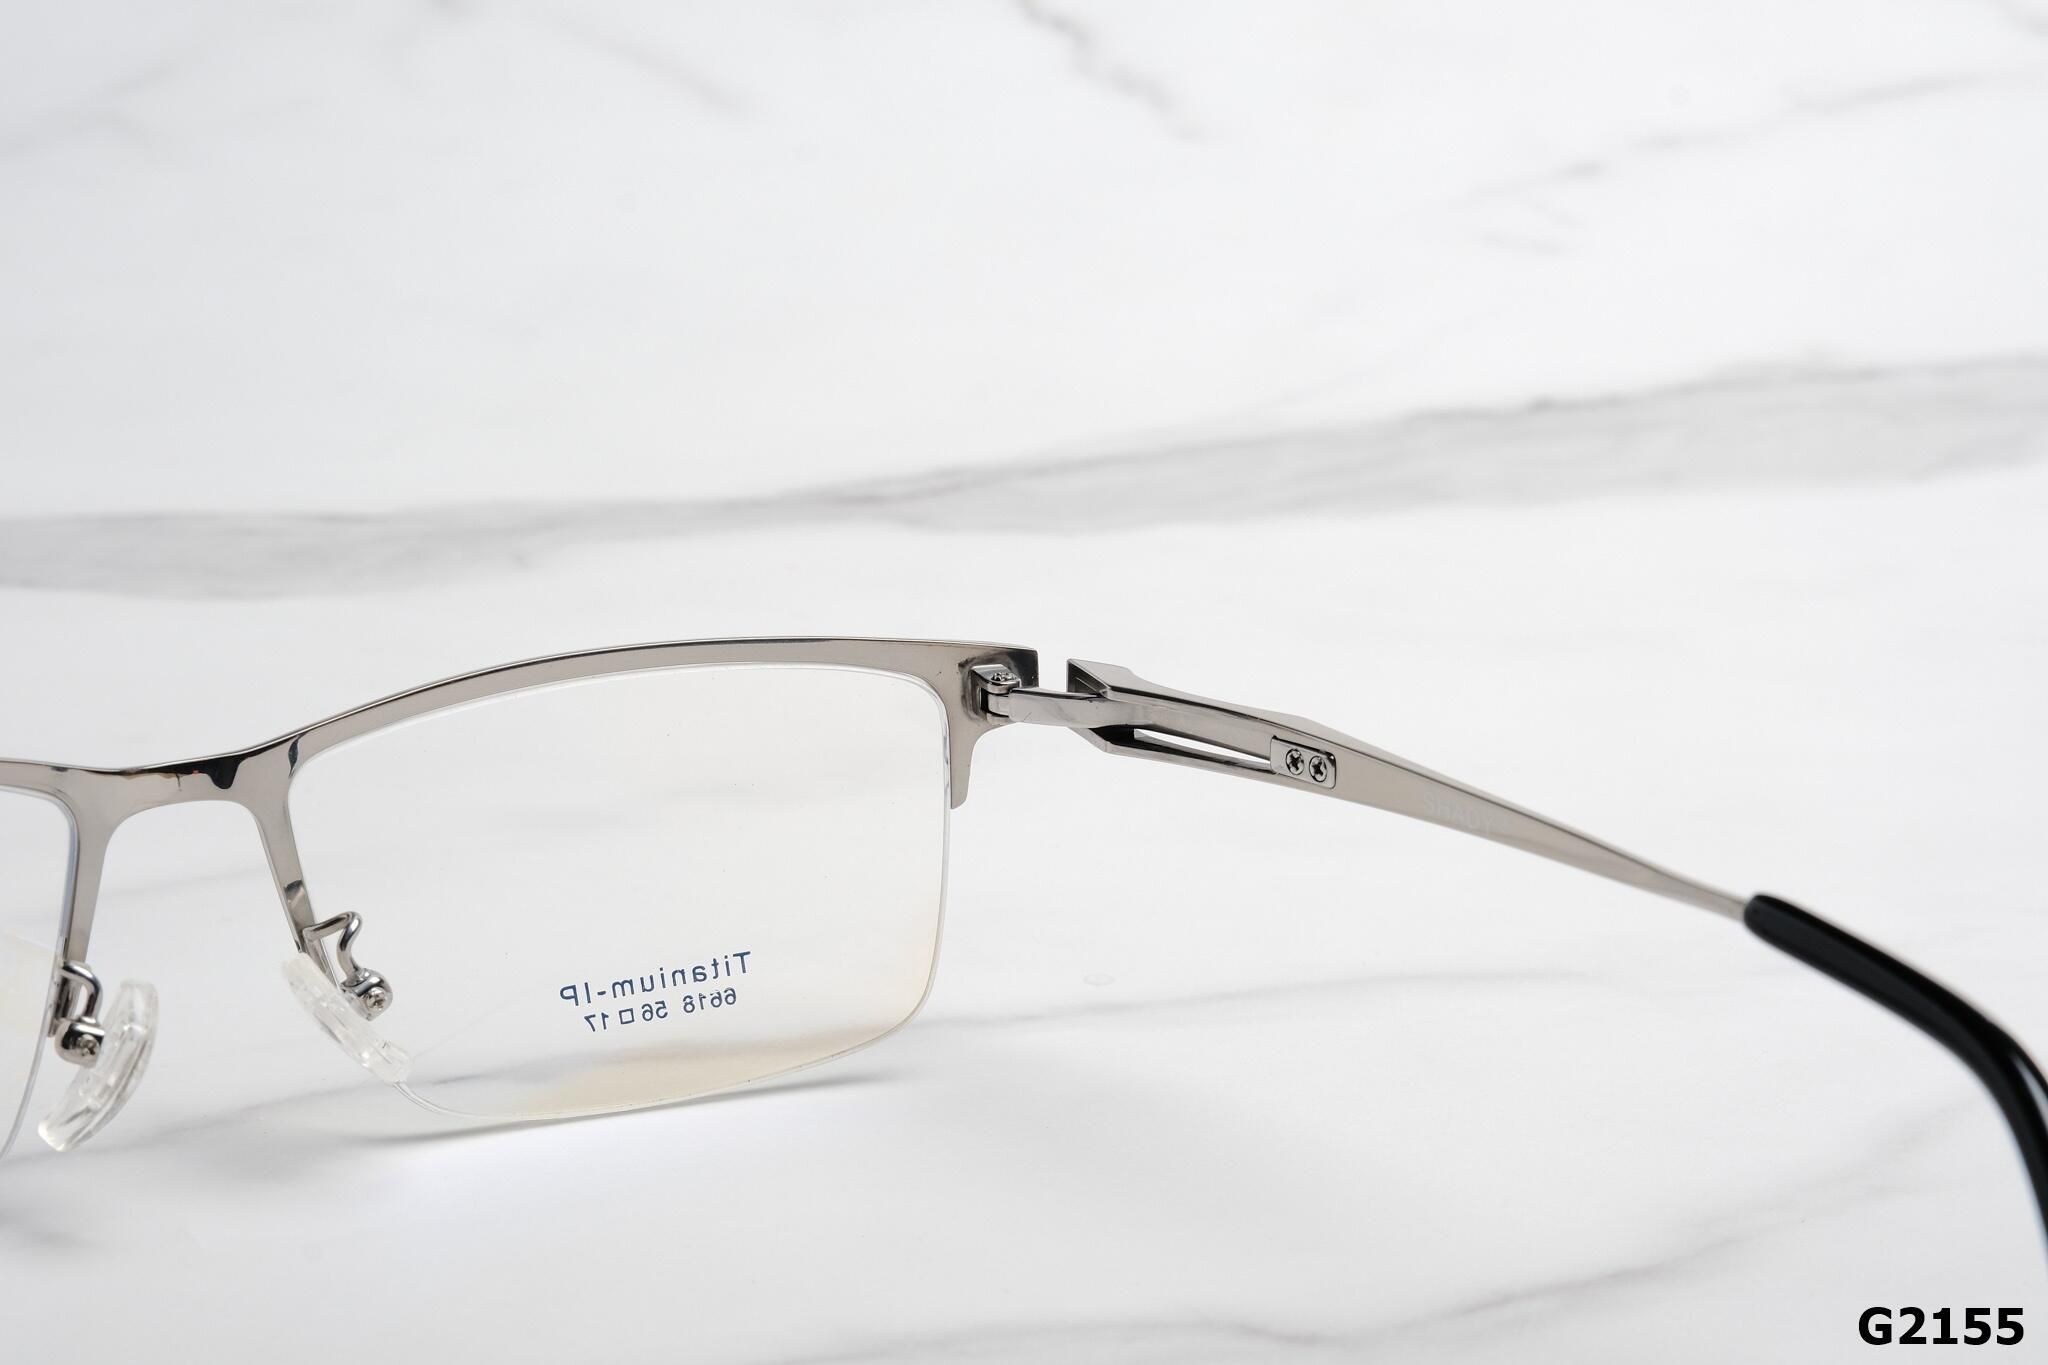  SHADY Eyewear - Glasses - G2155 